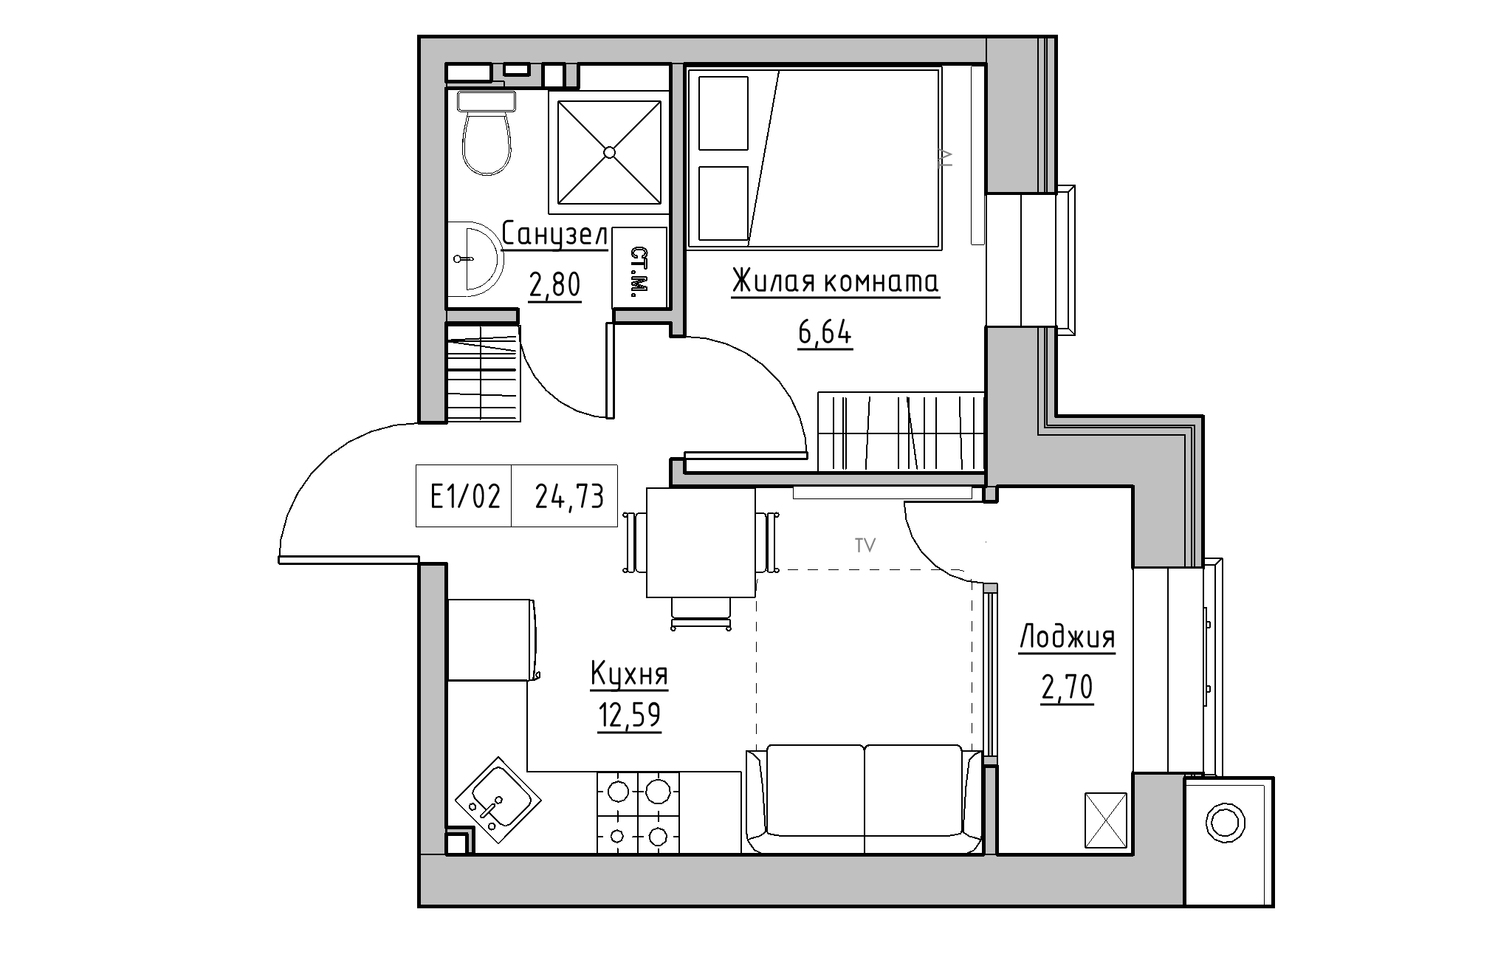 Planning 1-rm flats area 24.73m2, KS-013-02/0001.